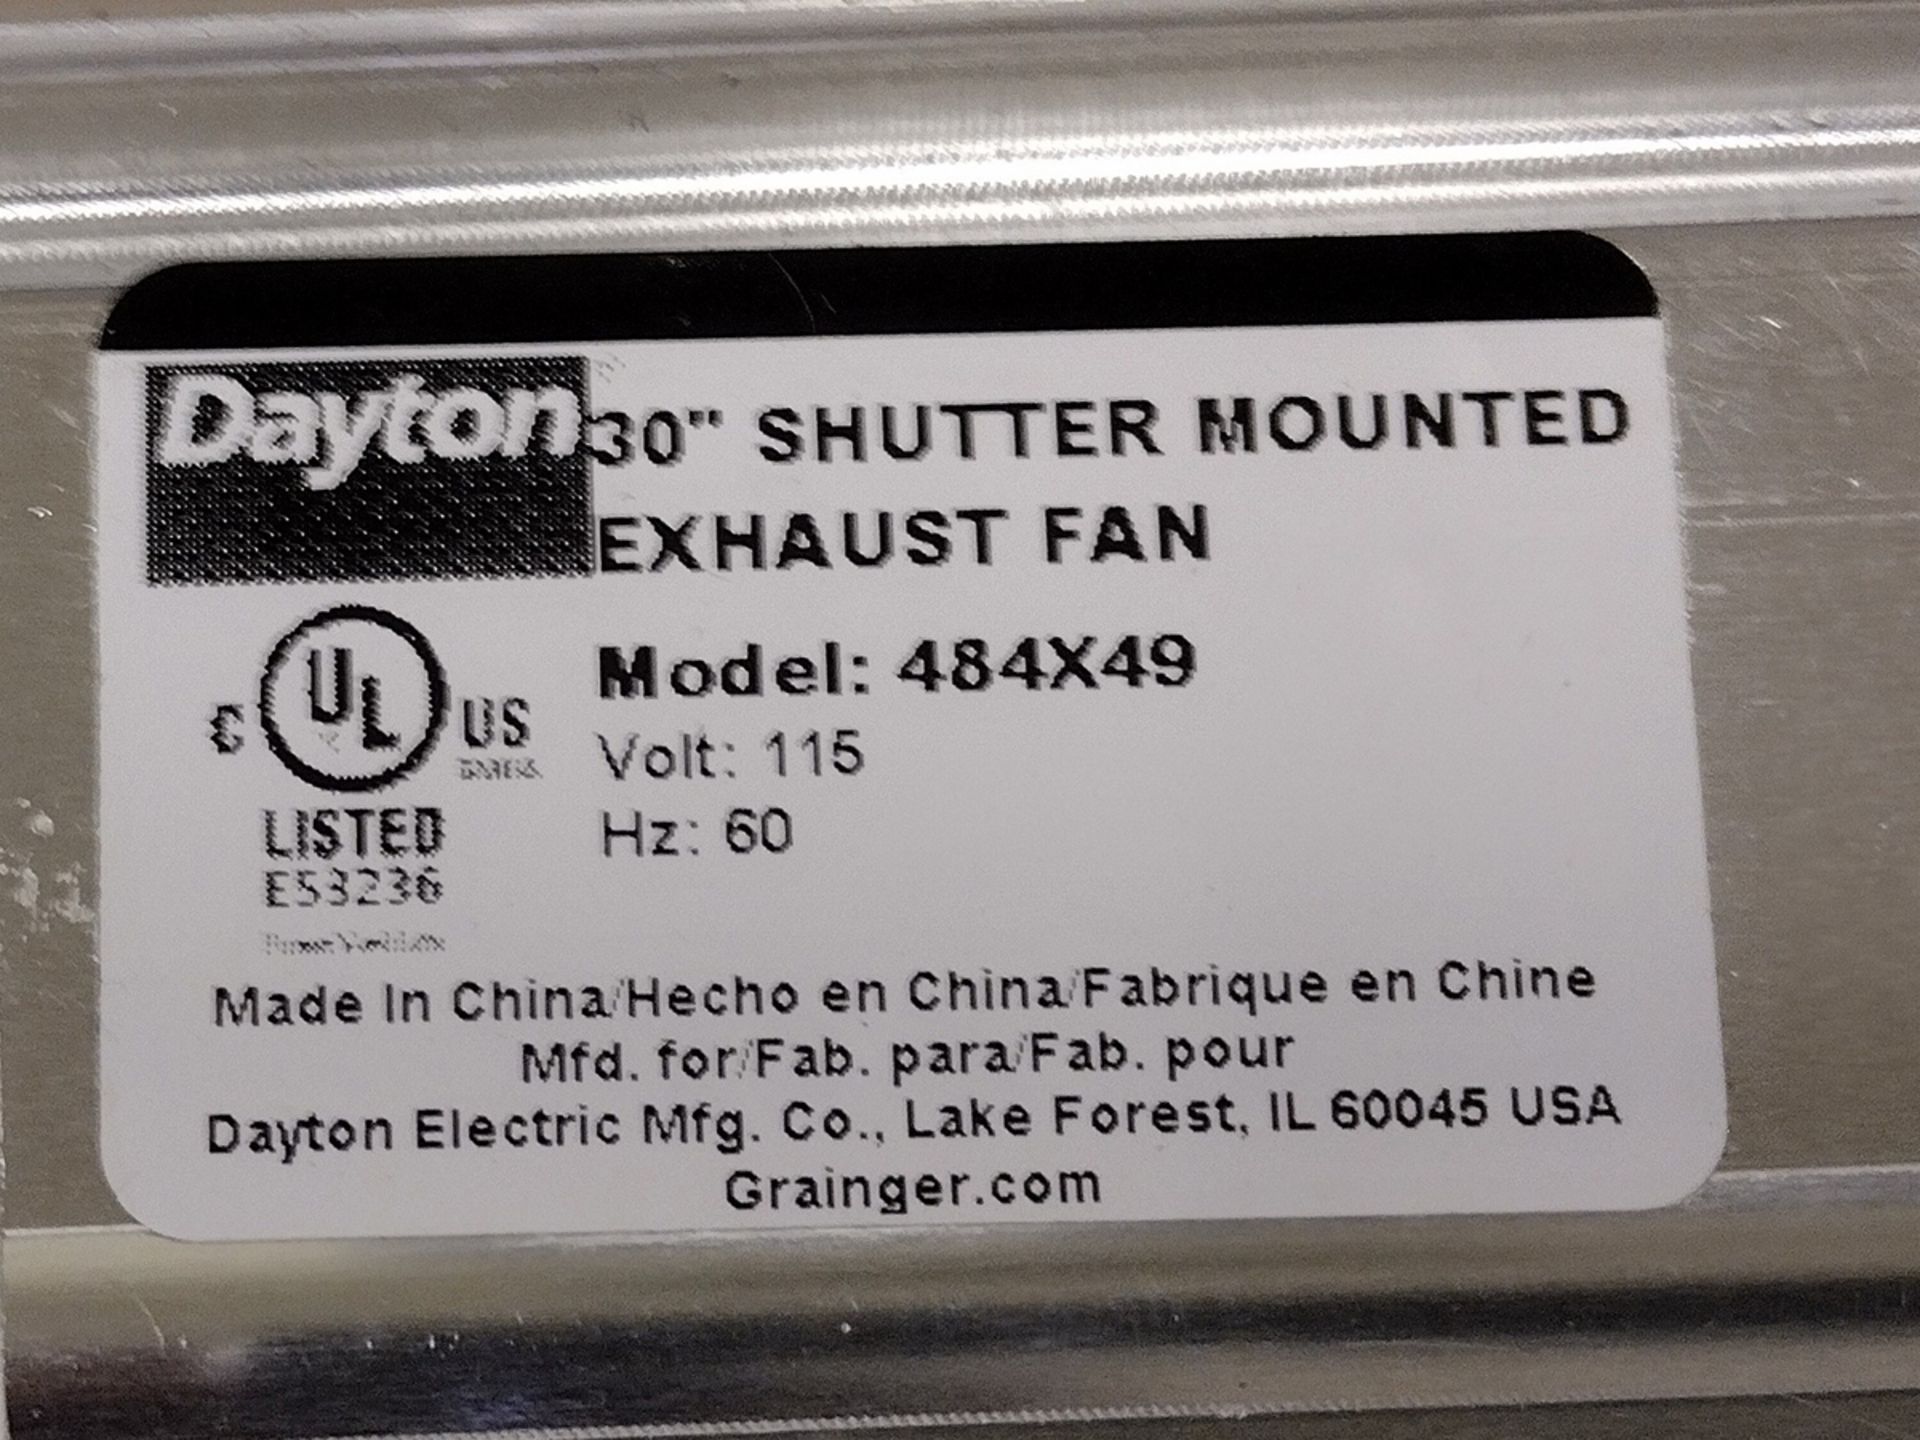 Dayton 30" Shutter Mounted Exhaust Fan (NIB) - Image 5 of 5